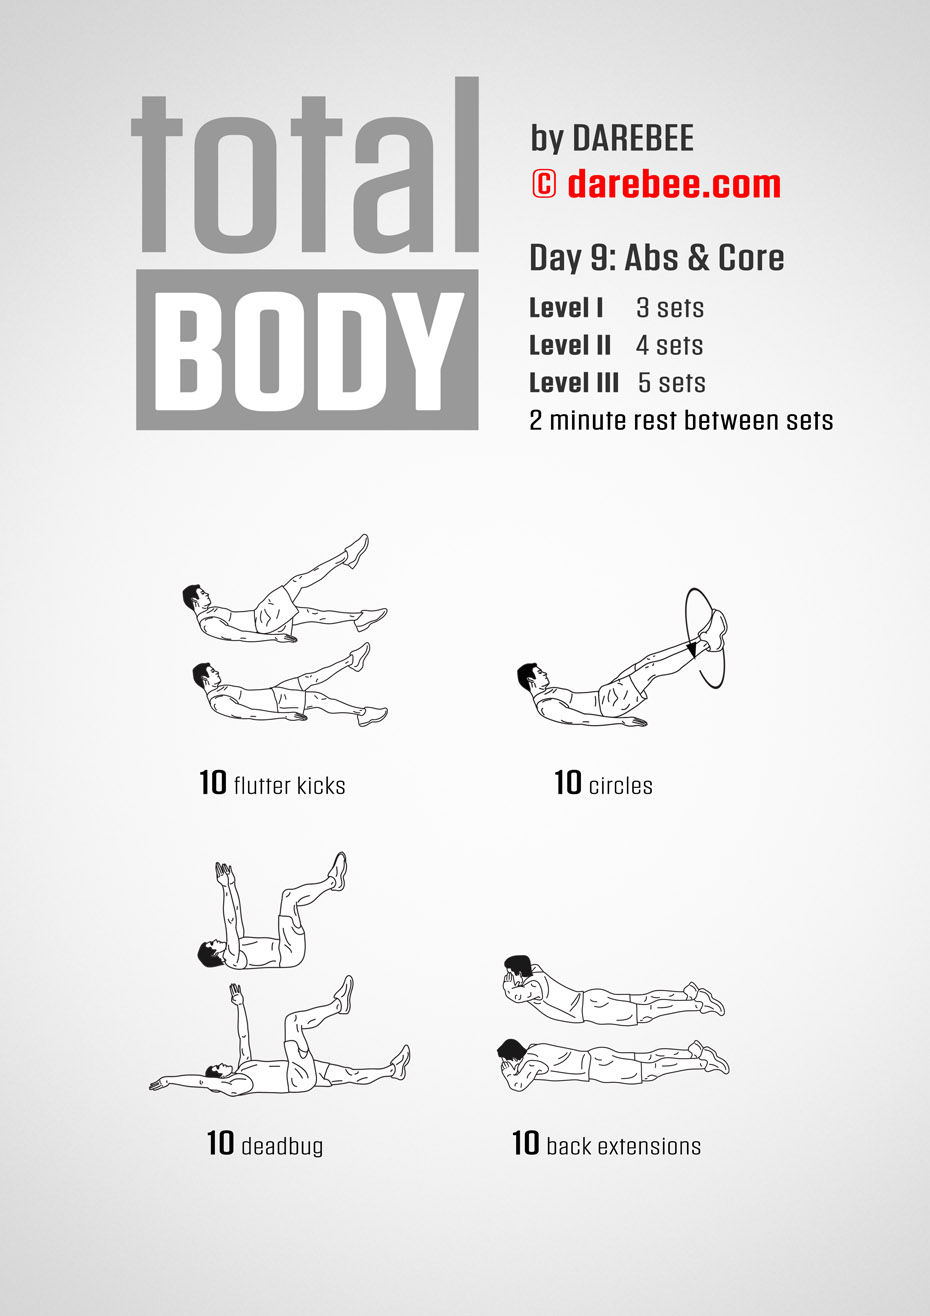 Total Body 30 Day Program by DAREBEE